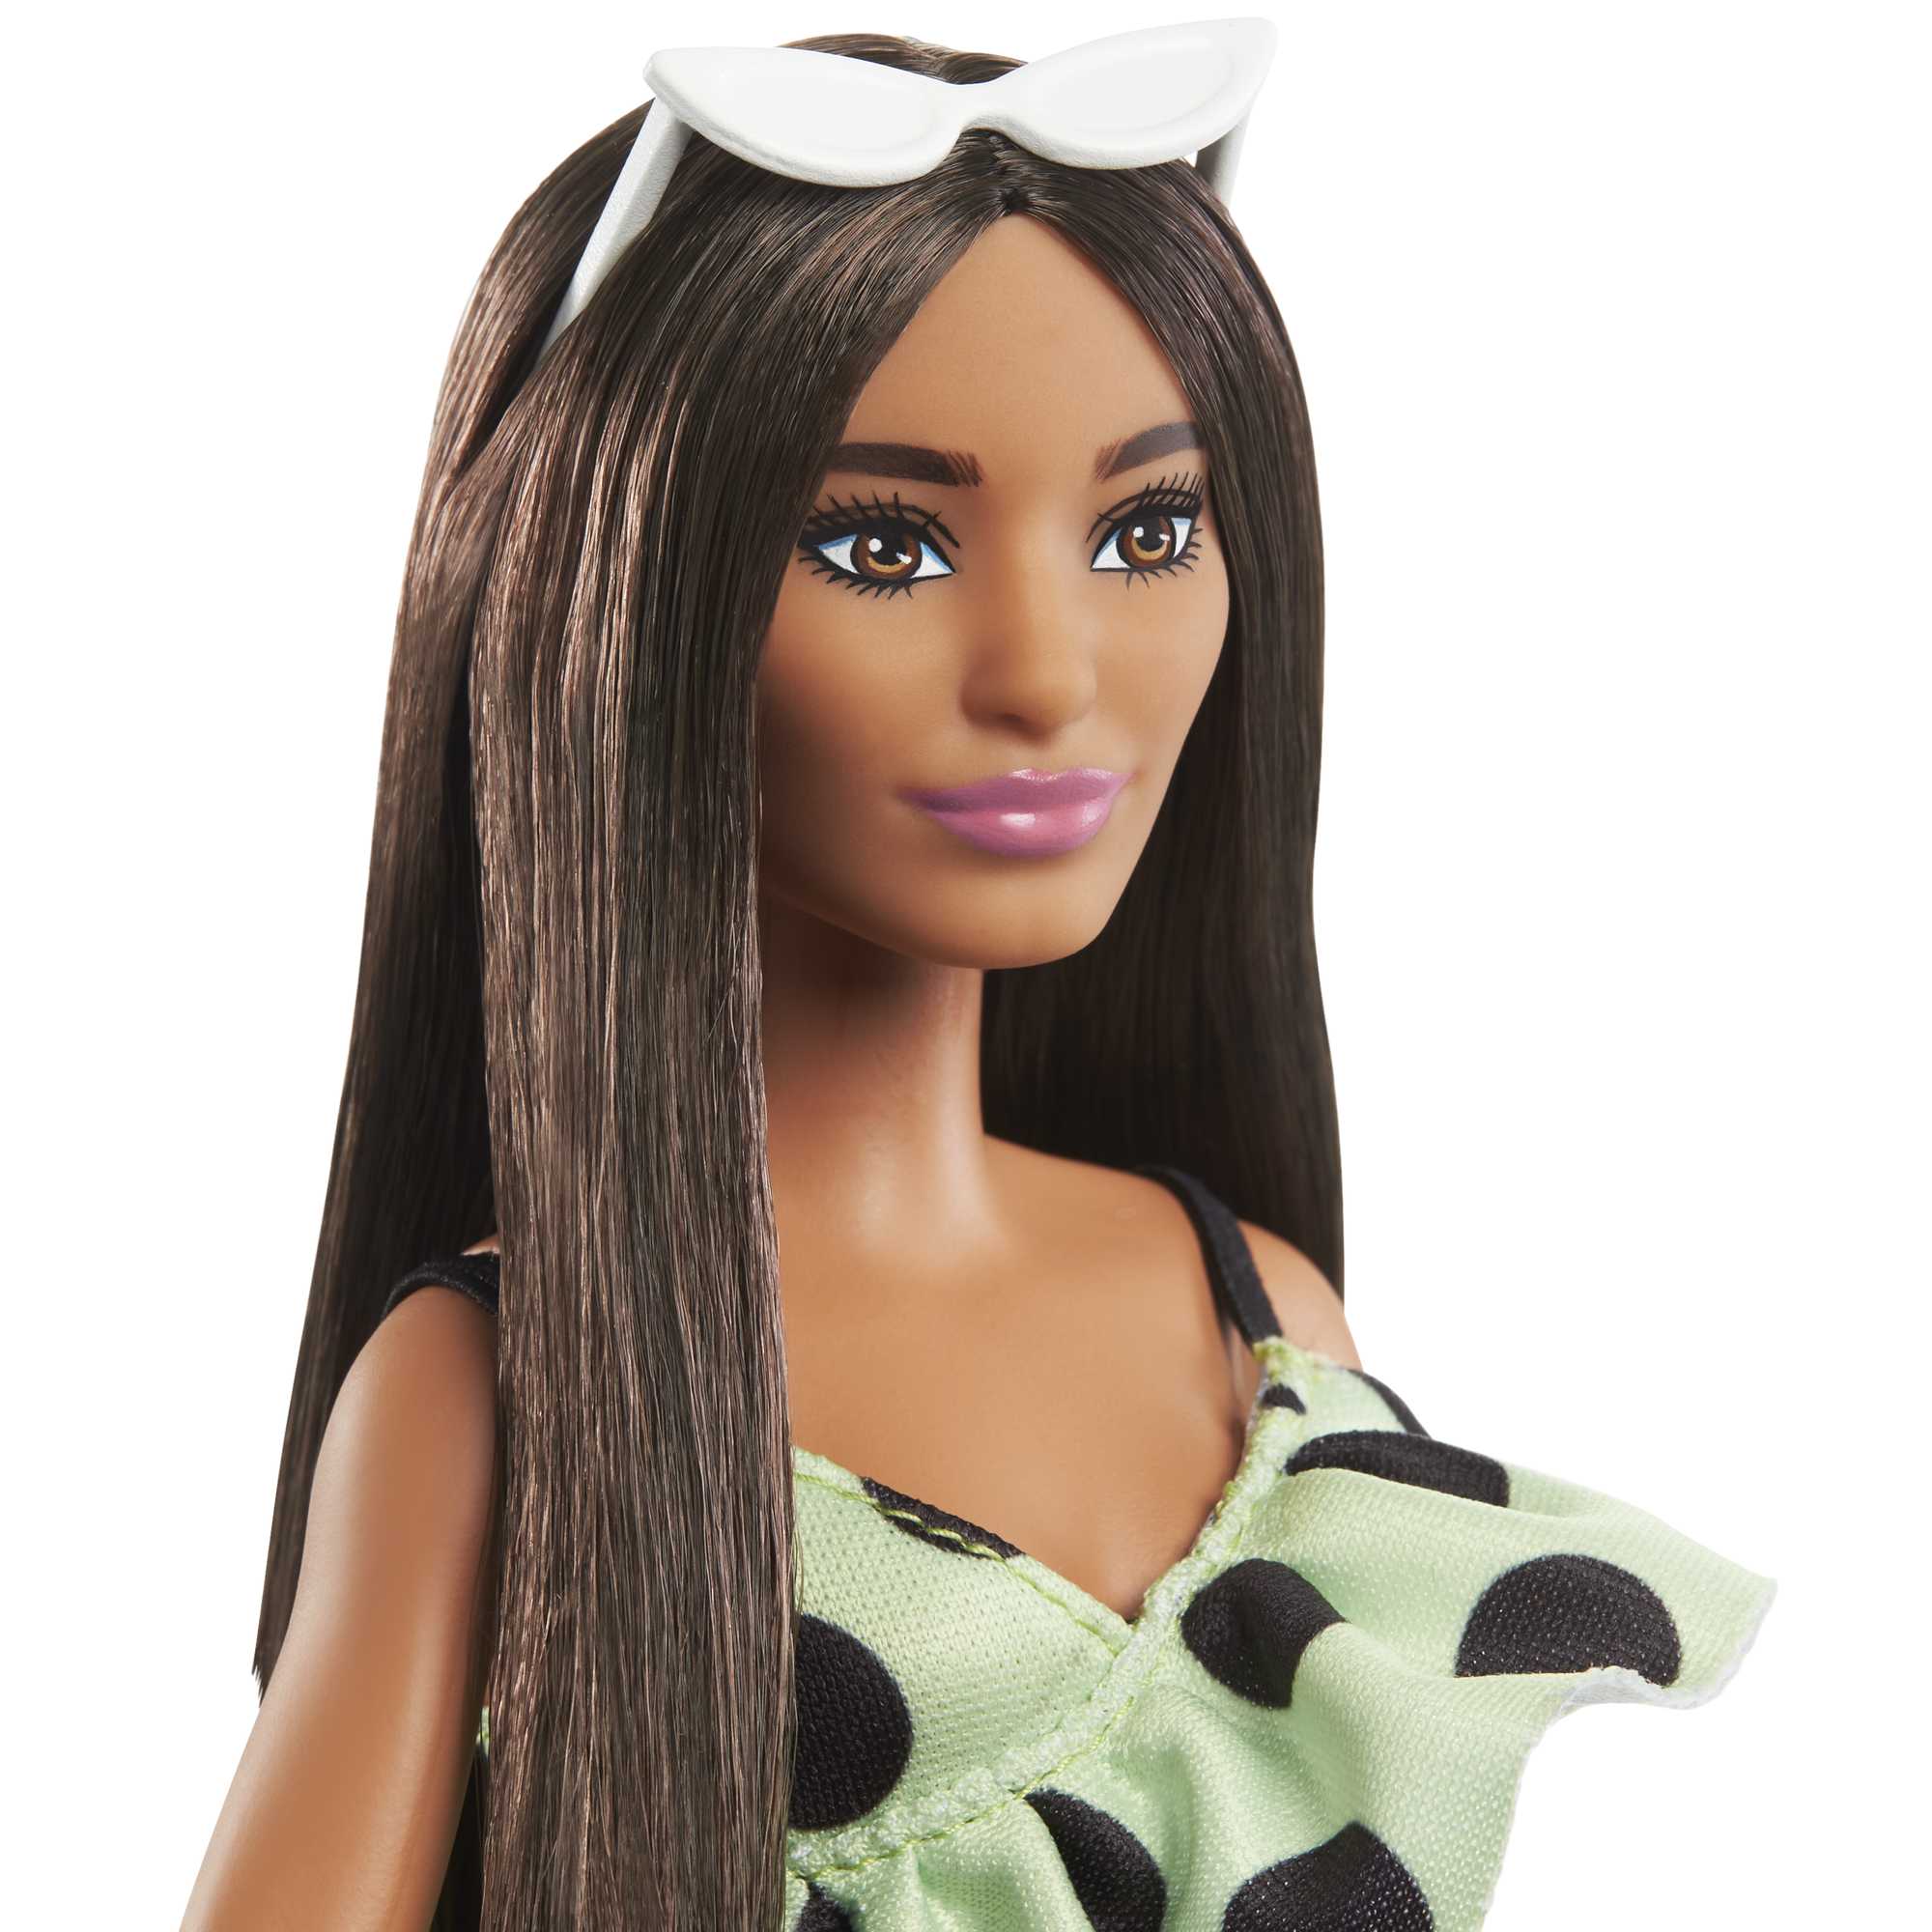 Кукла Barbie Модница в комбинезоне цвета лайм в горошек (HJR99) - фото 4